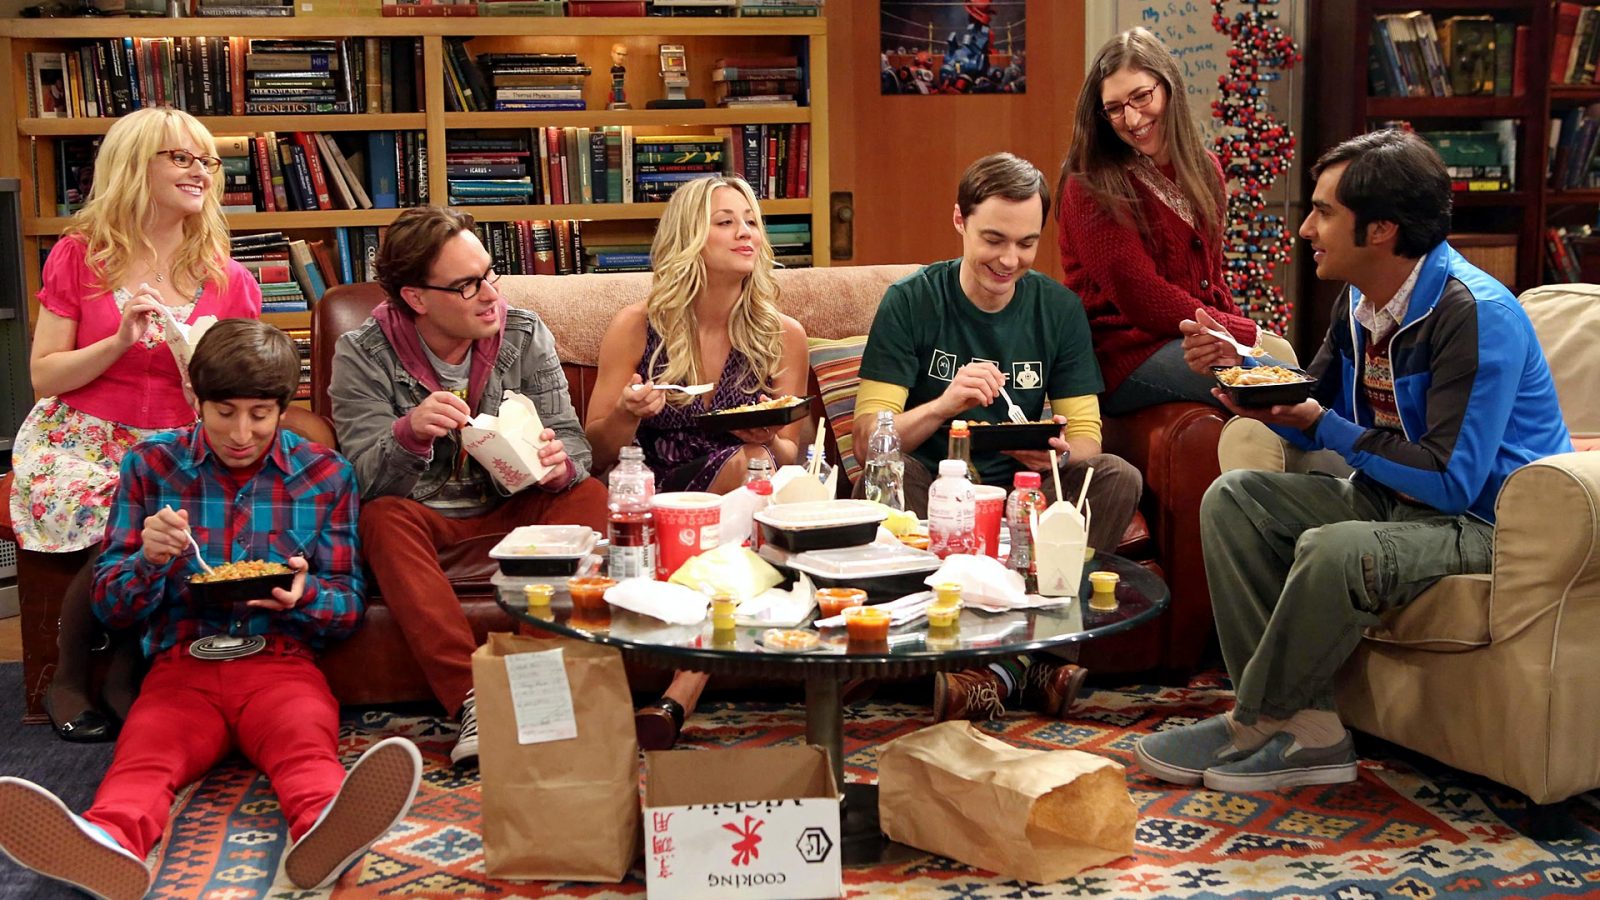 "The Big Bang Theory" (2007 - present)